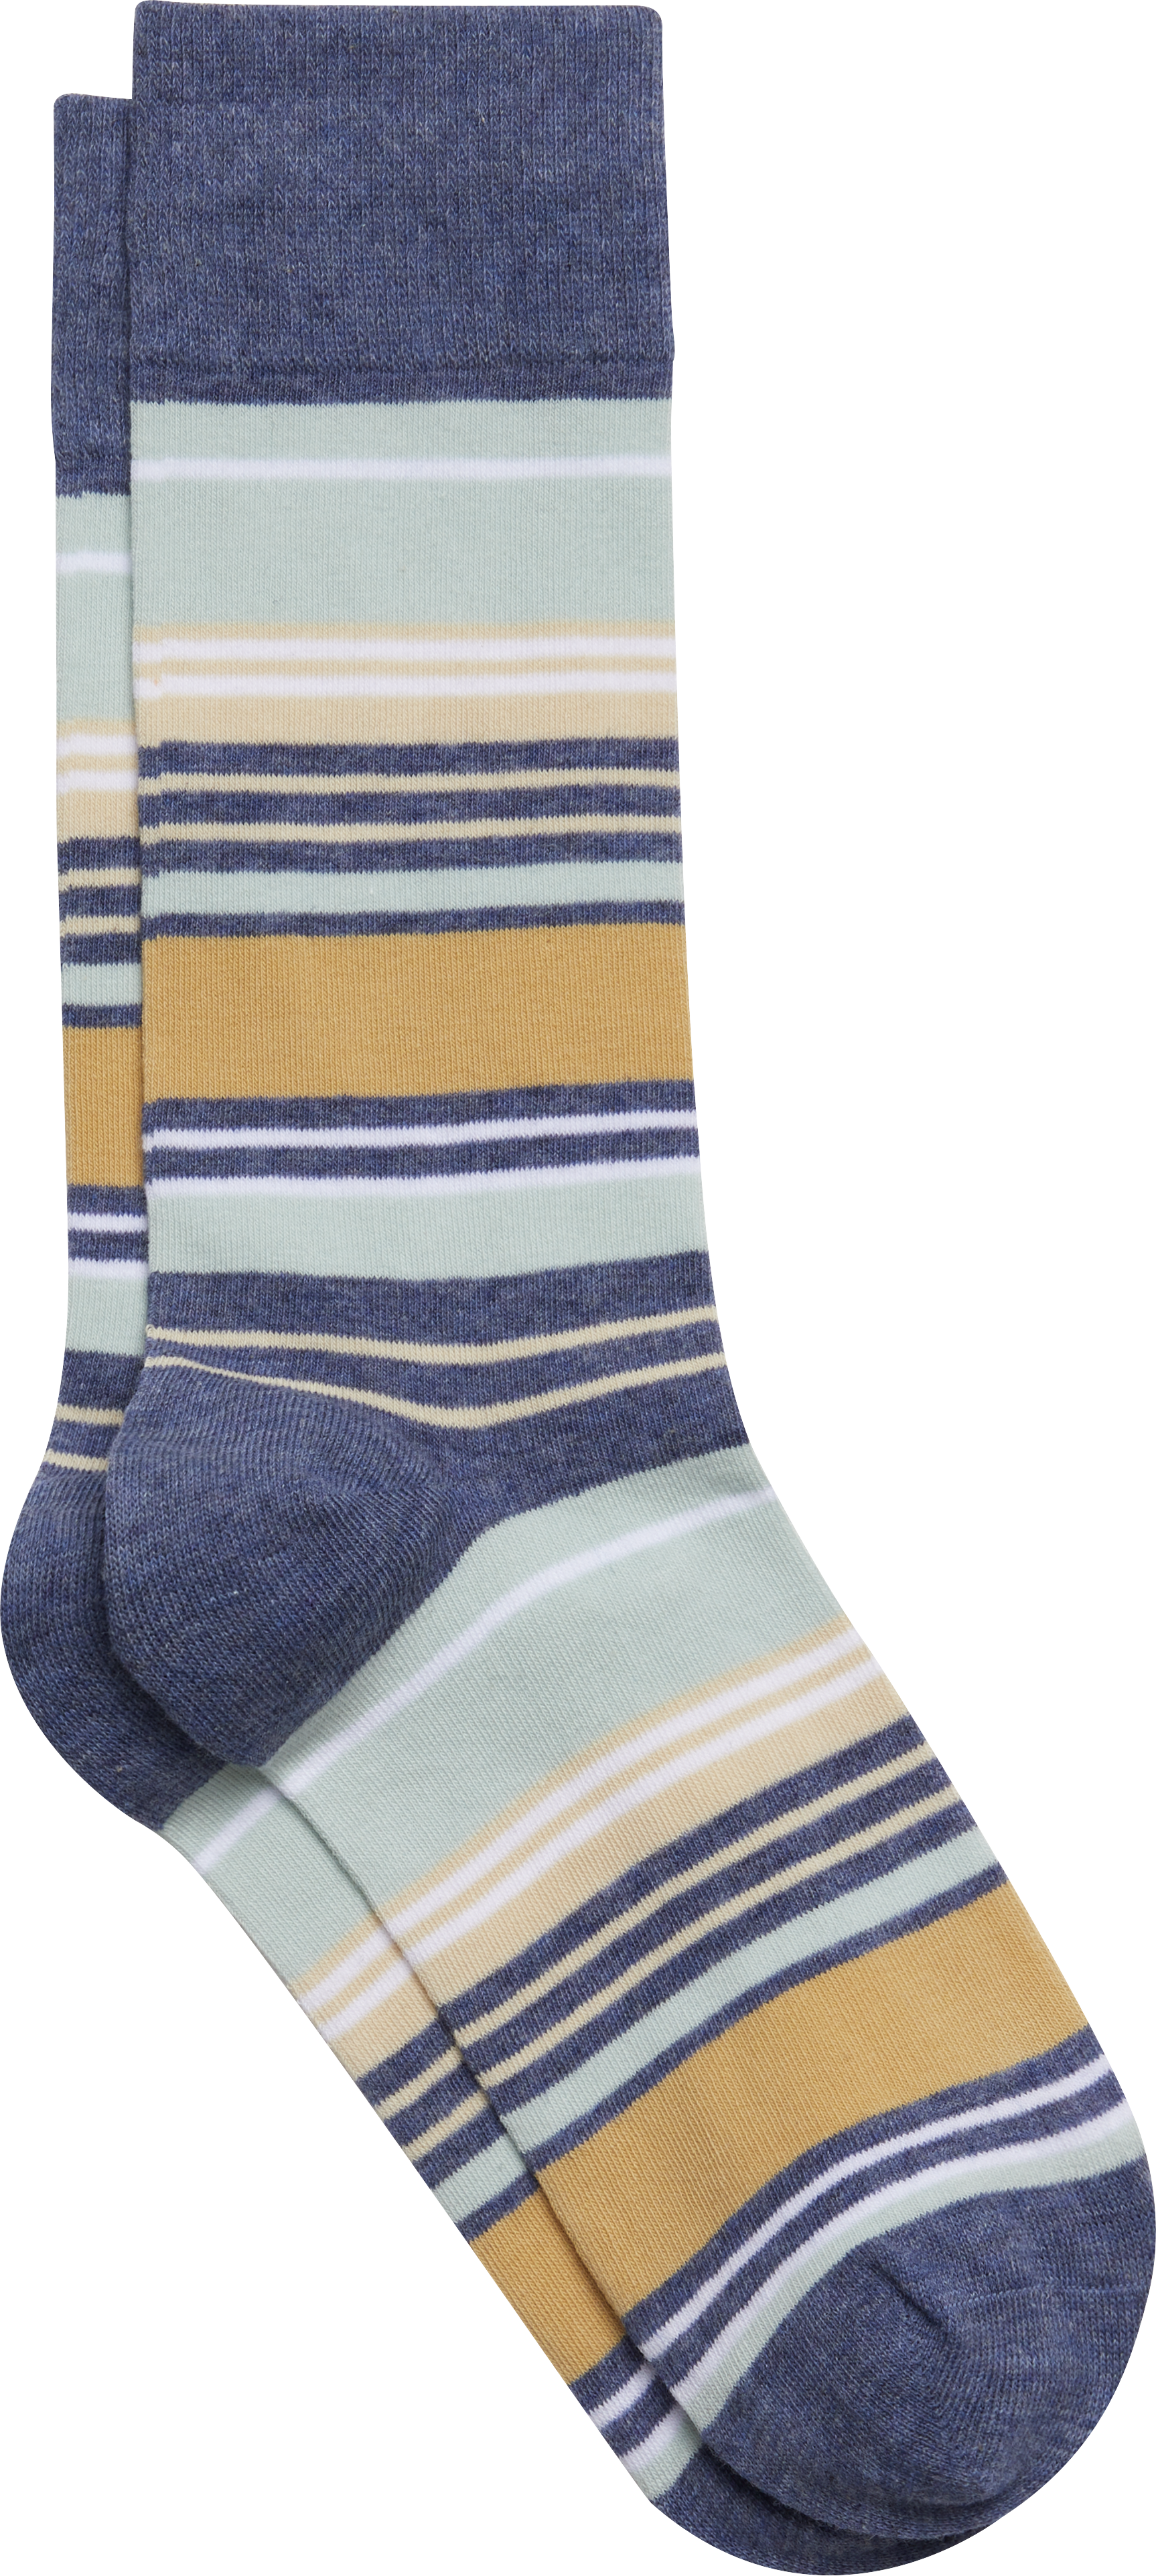 Stripe Socks 1 Pair